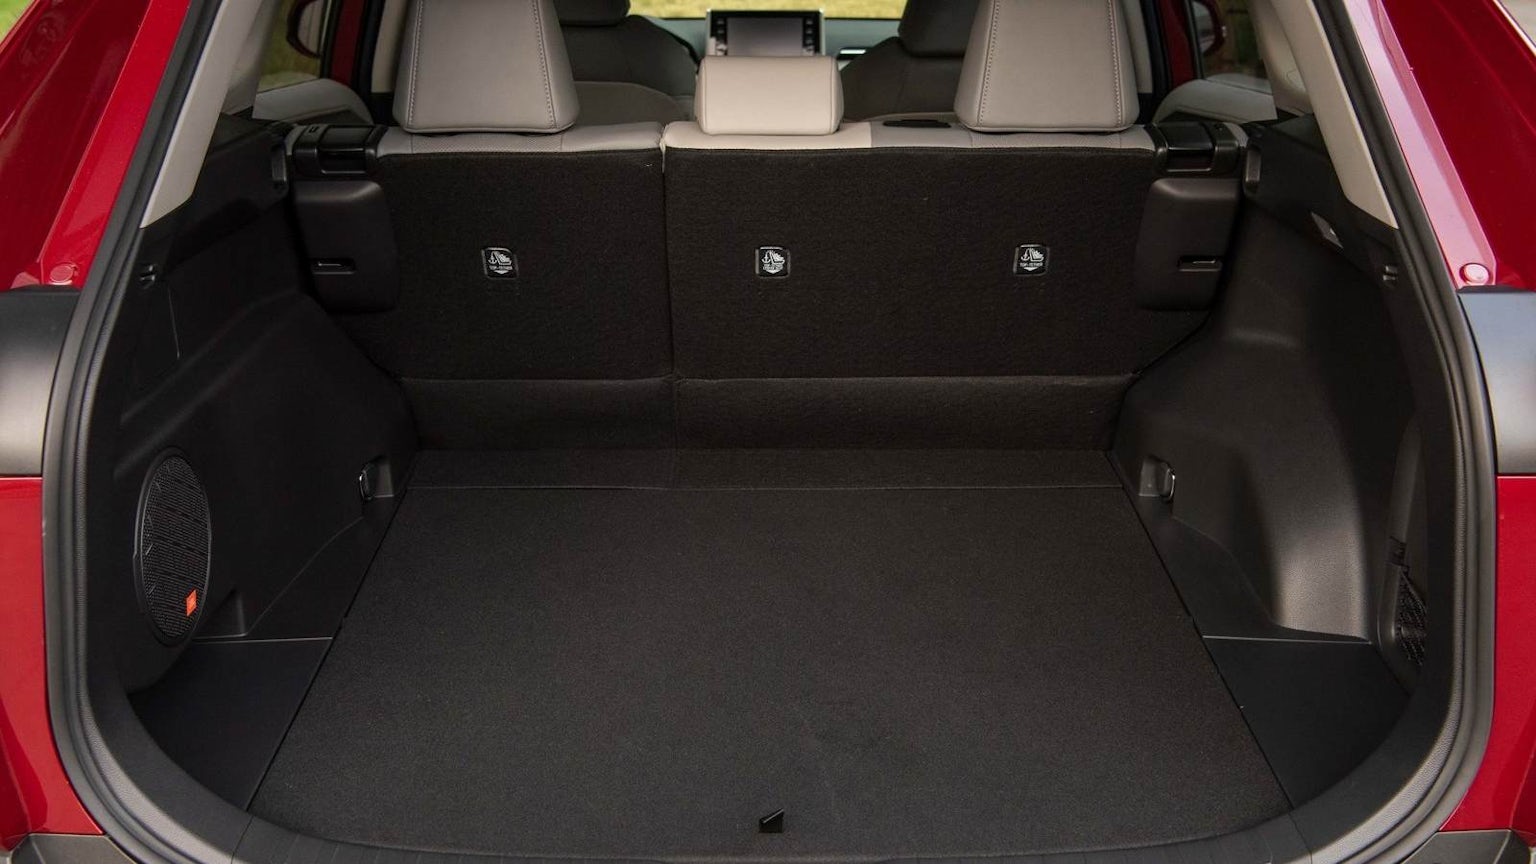 Medidas y maletero del Toyota RAV4 carwow